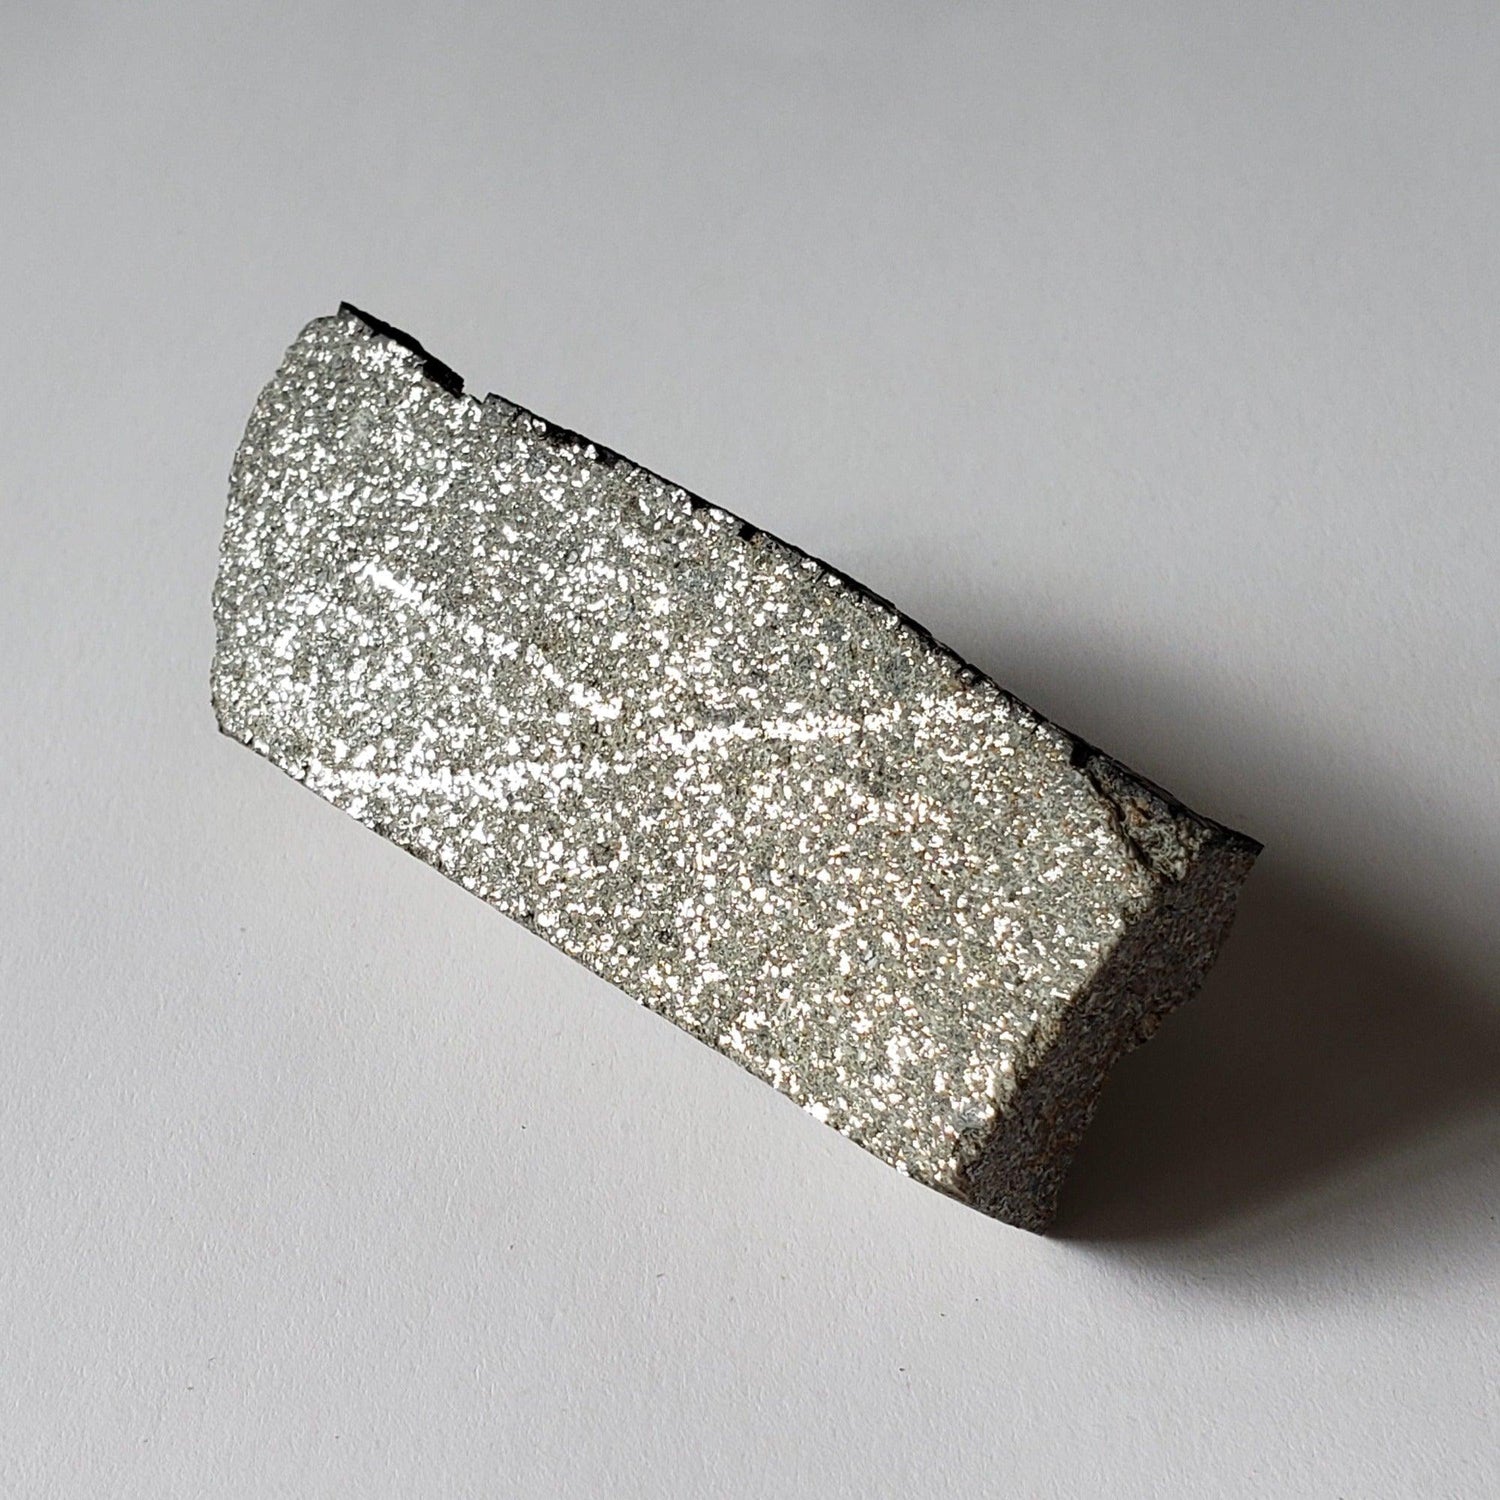 El Hammami Meteorite | 46.1gr | Fresh H5 1997 Slice | Tiris Zemmour, Mauritania